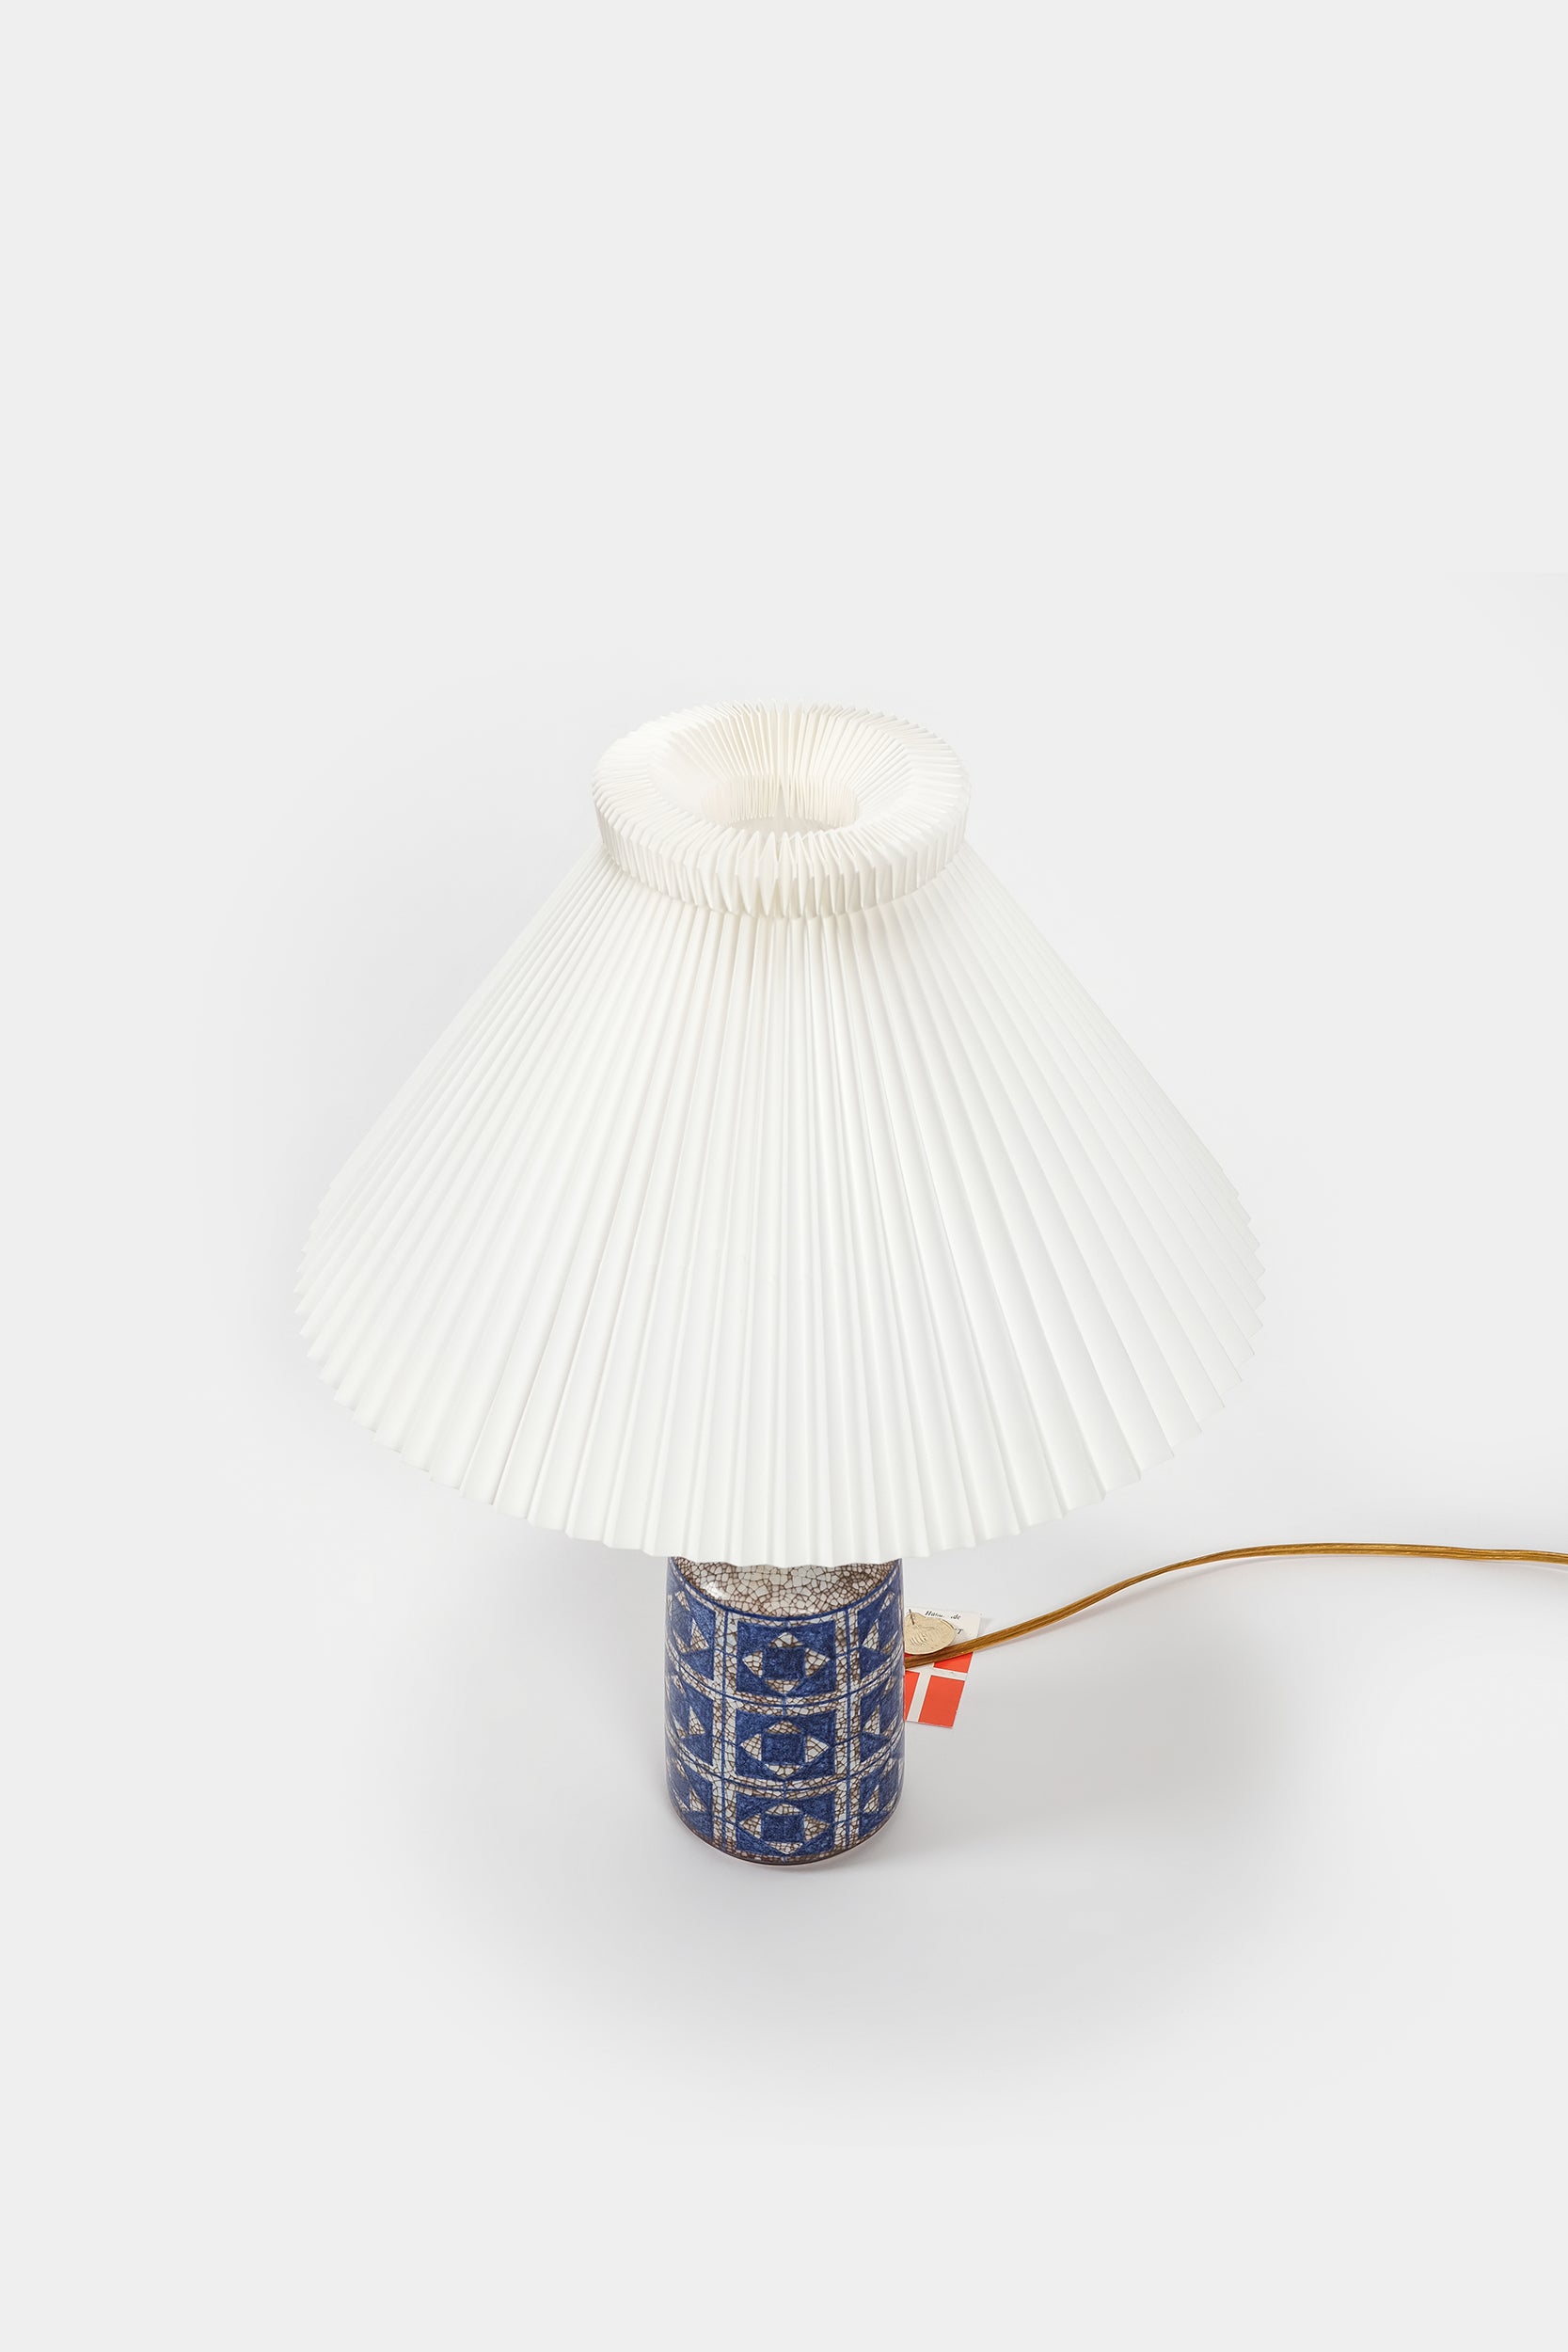 Keramiklampe, Michael Andersen & Son, 50er